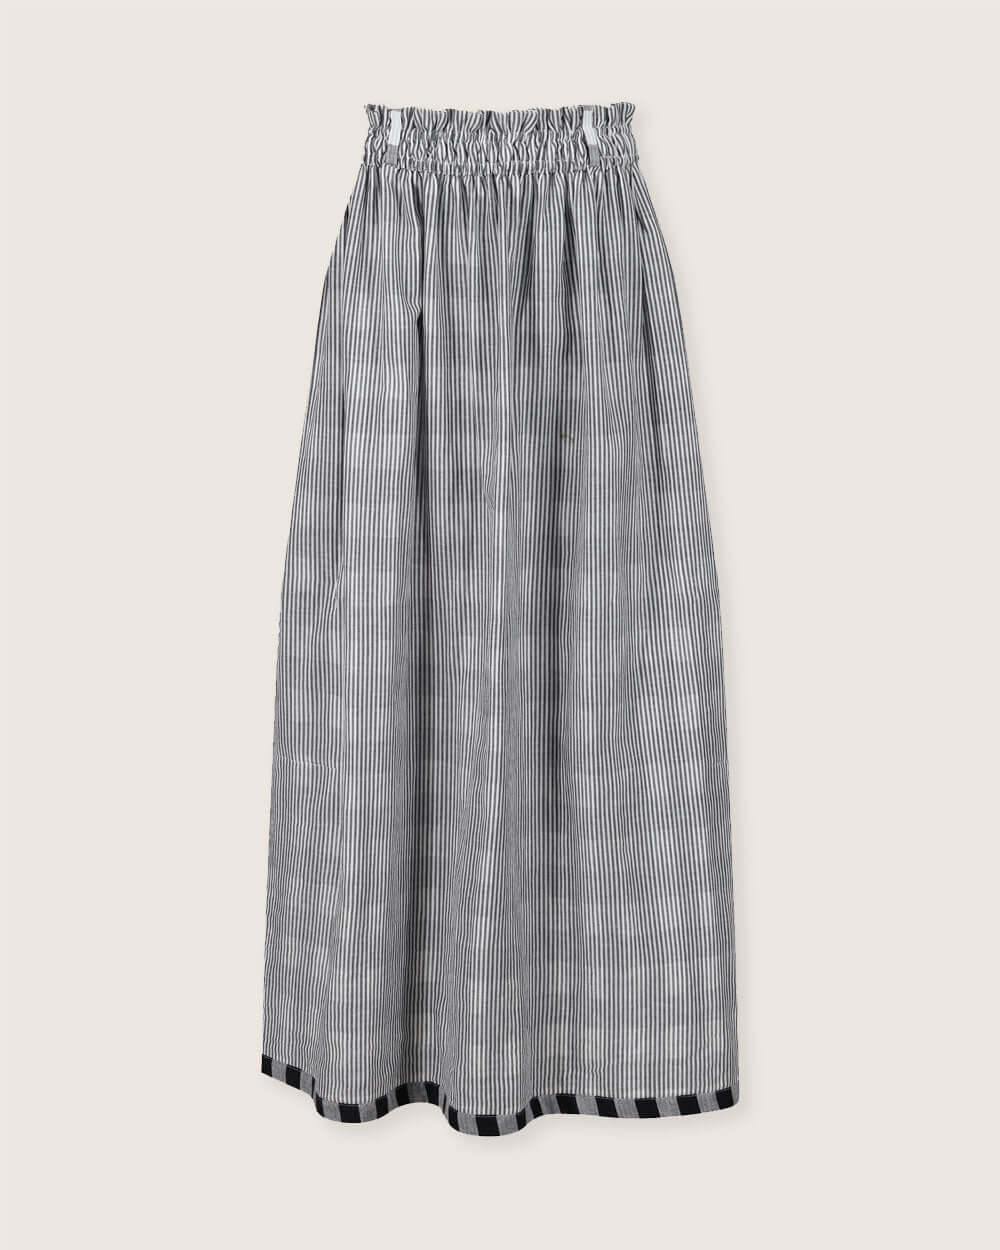 Anna Reversible Check Tie Dress Skirt